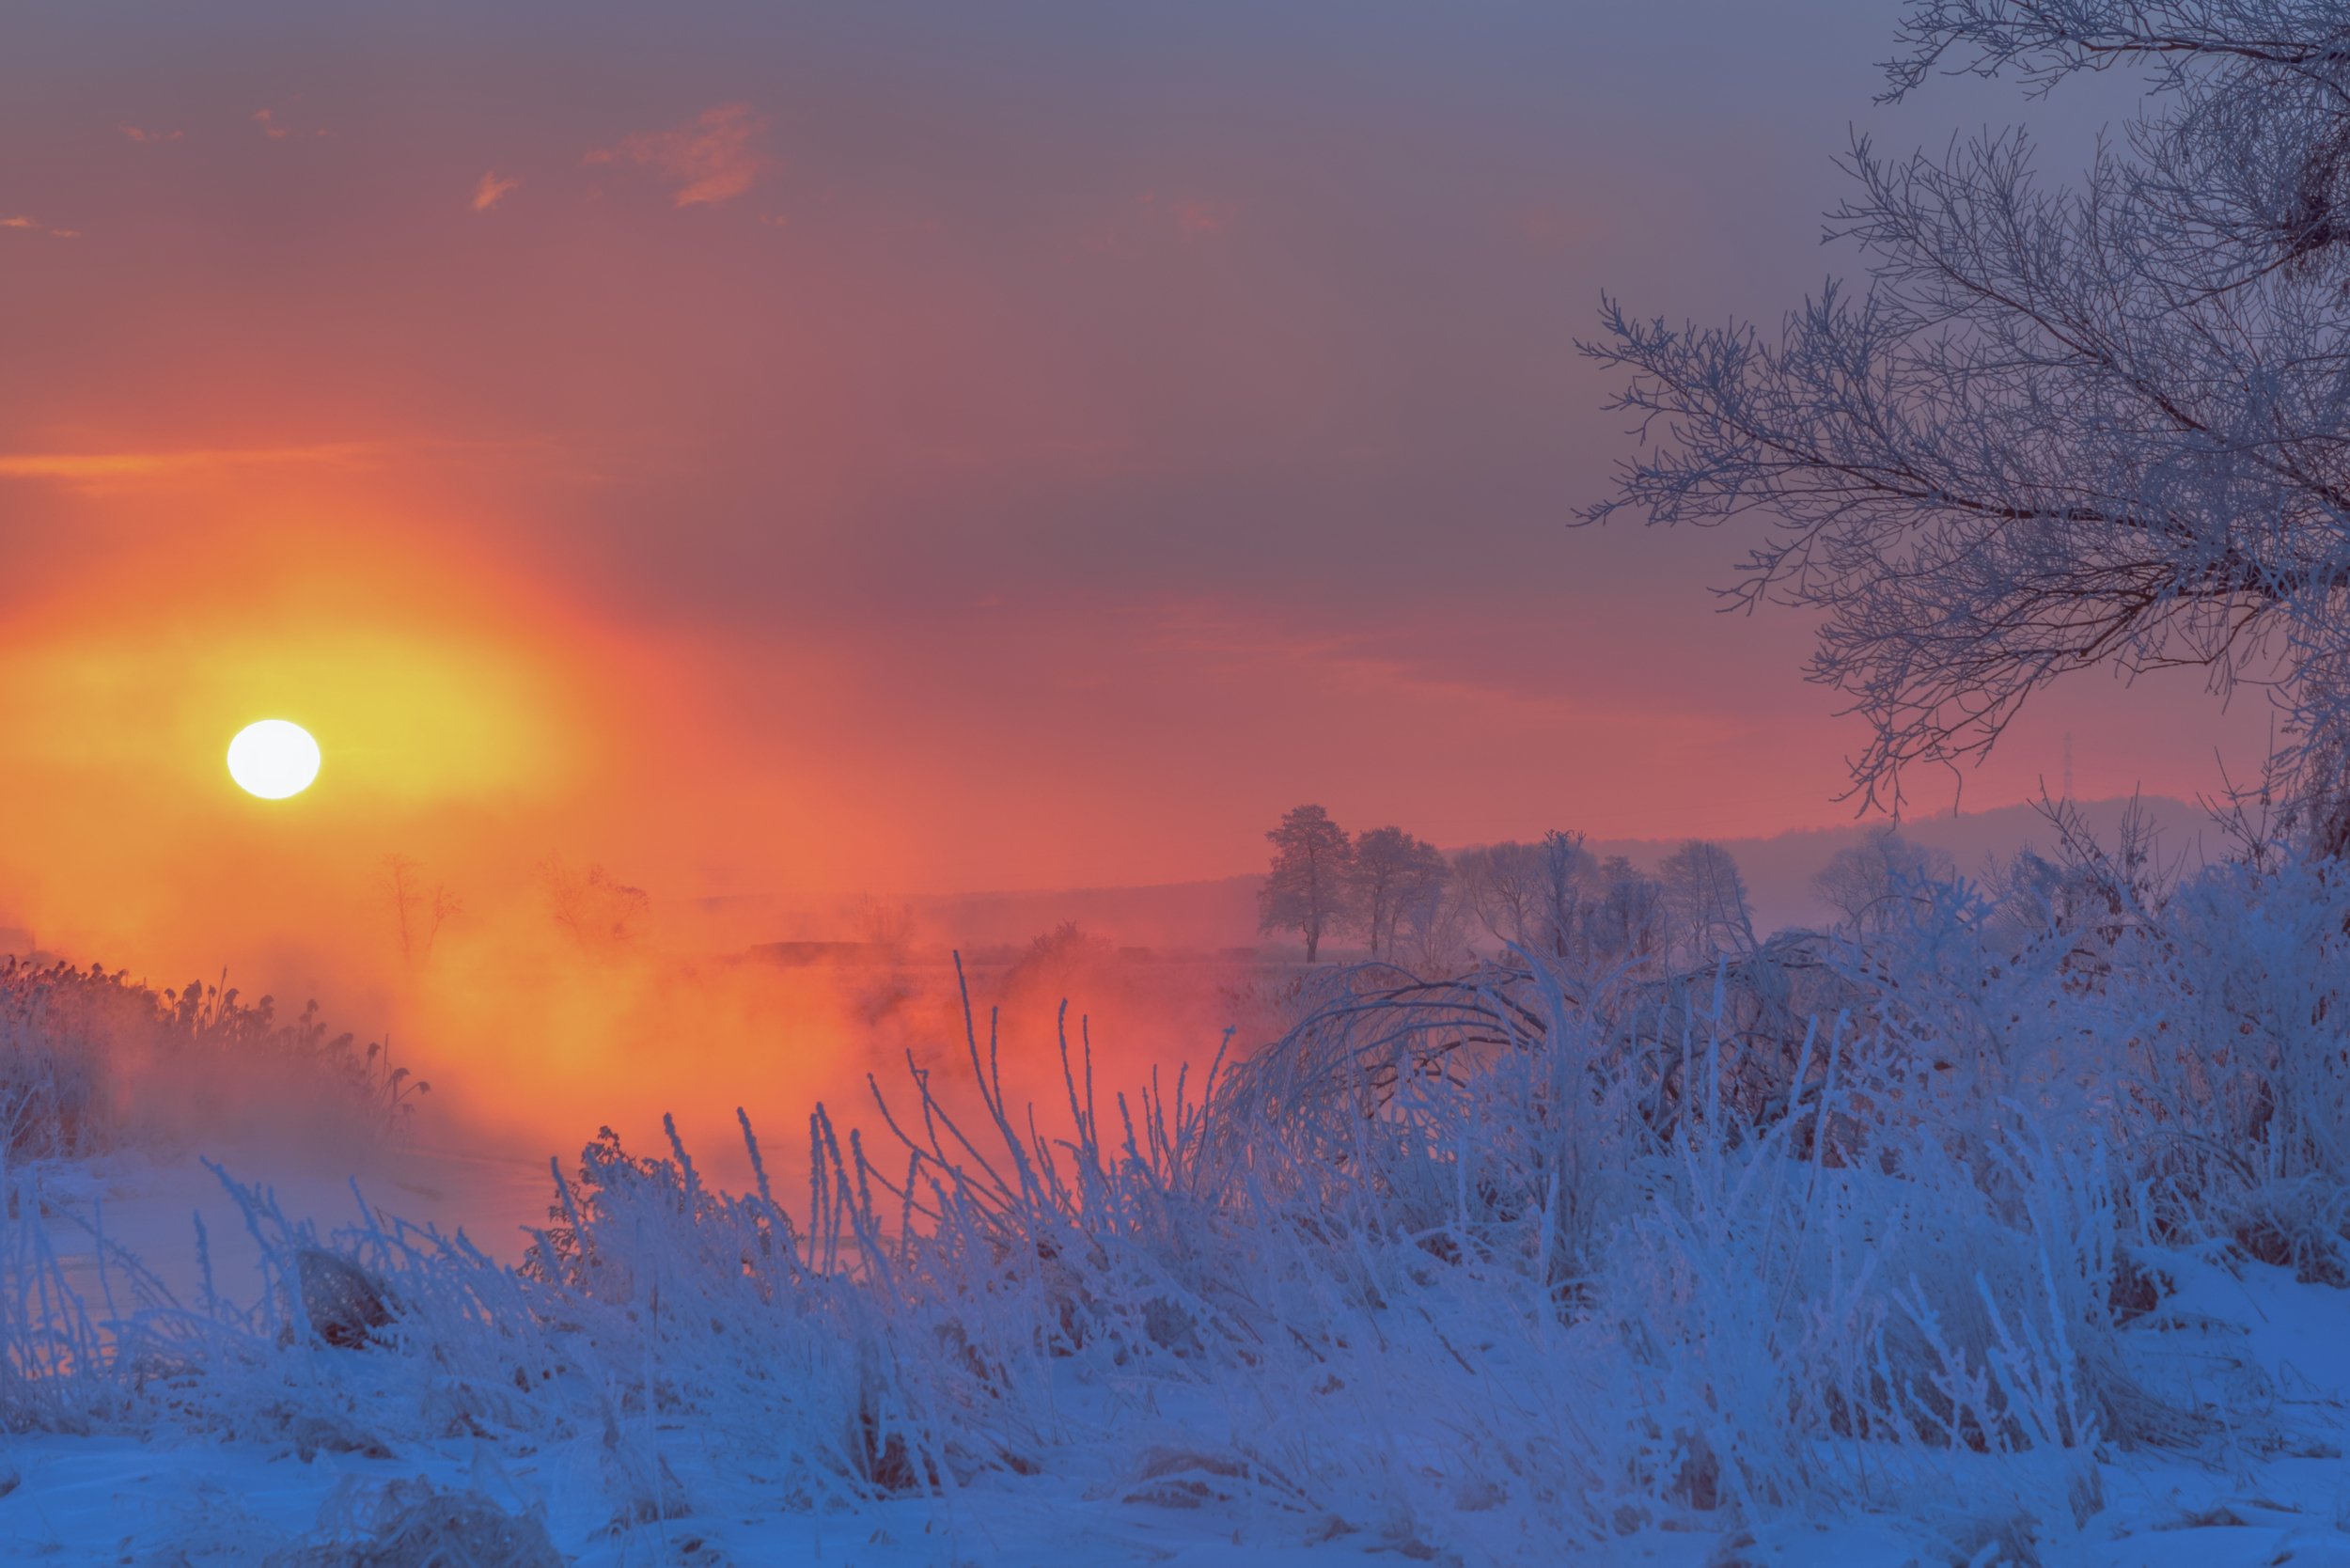 Winter 2021  snow  sunrise  frost  dawn  river  Gwda  landscape  nature  sun  sky  clouds  light  trees  nikon D750  atmosphere, Krzysztof Tollas